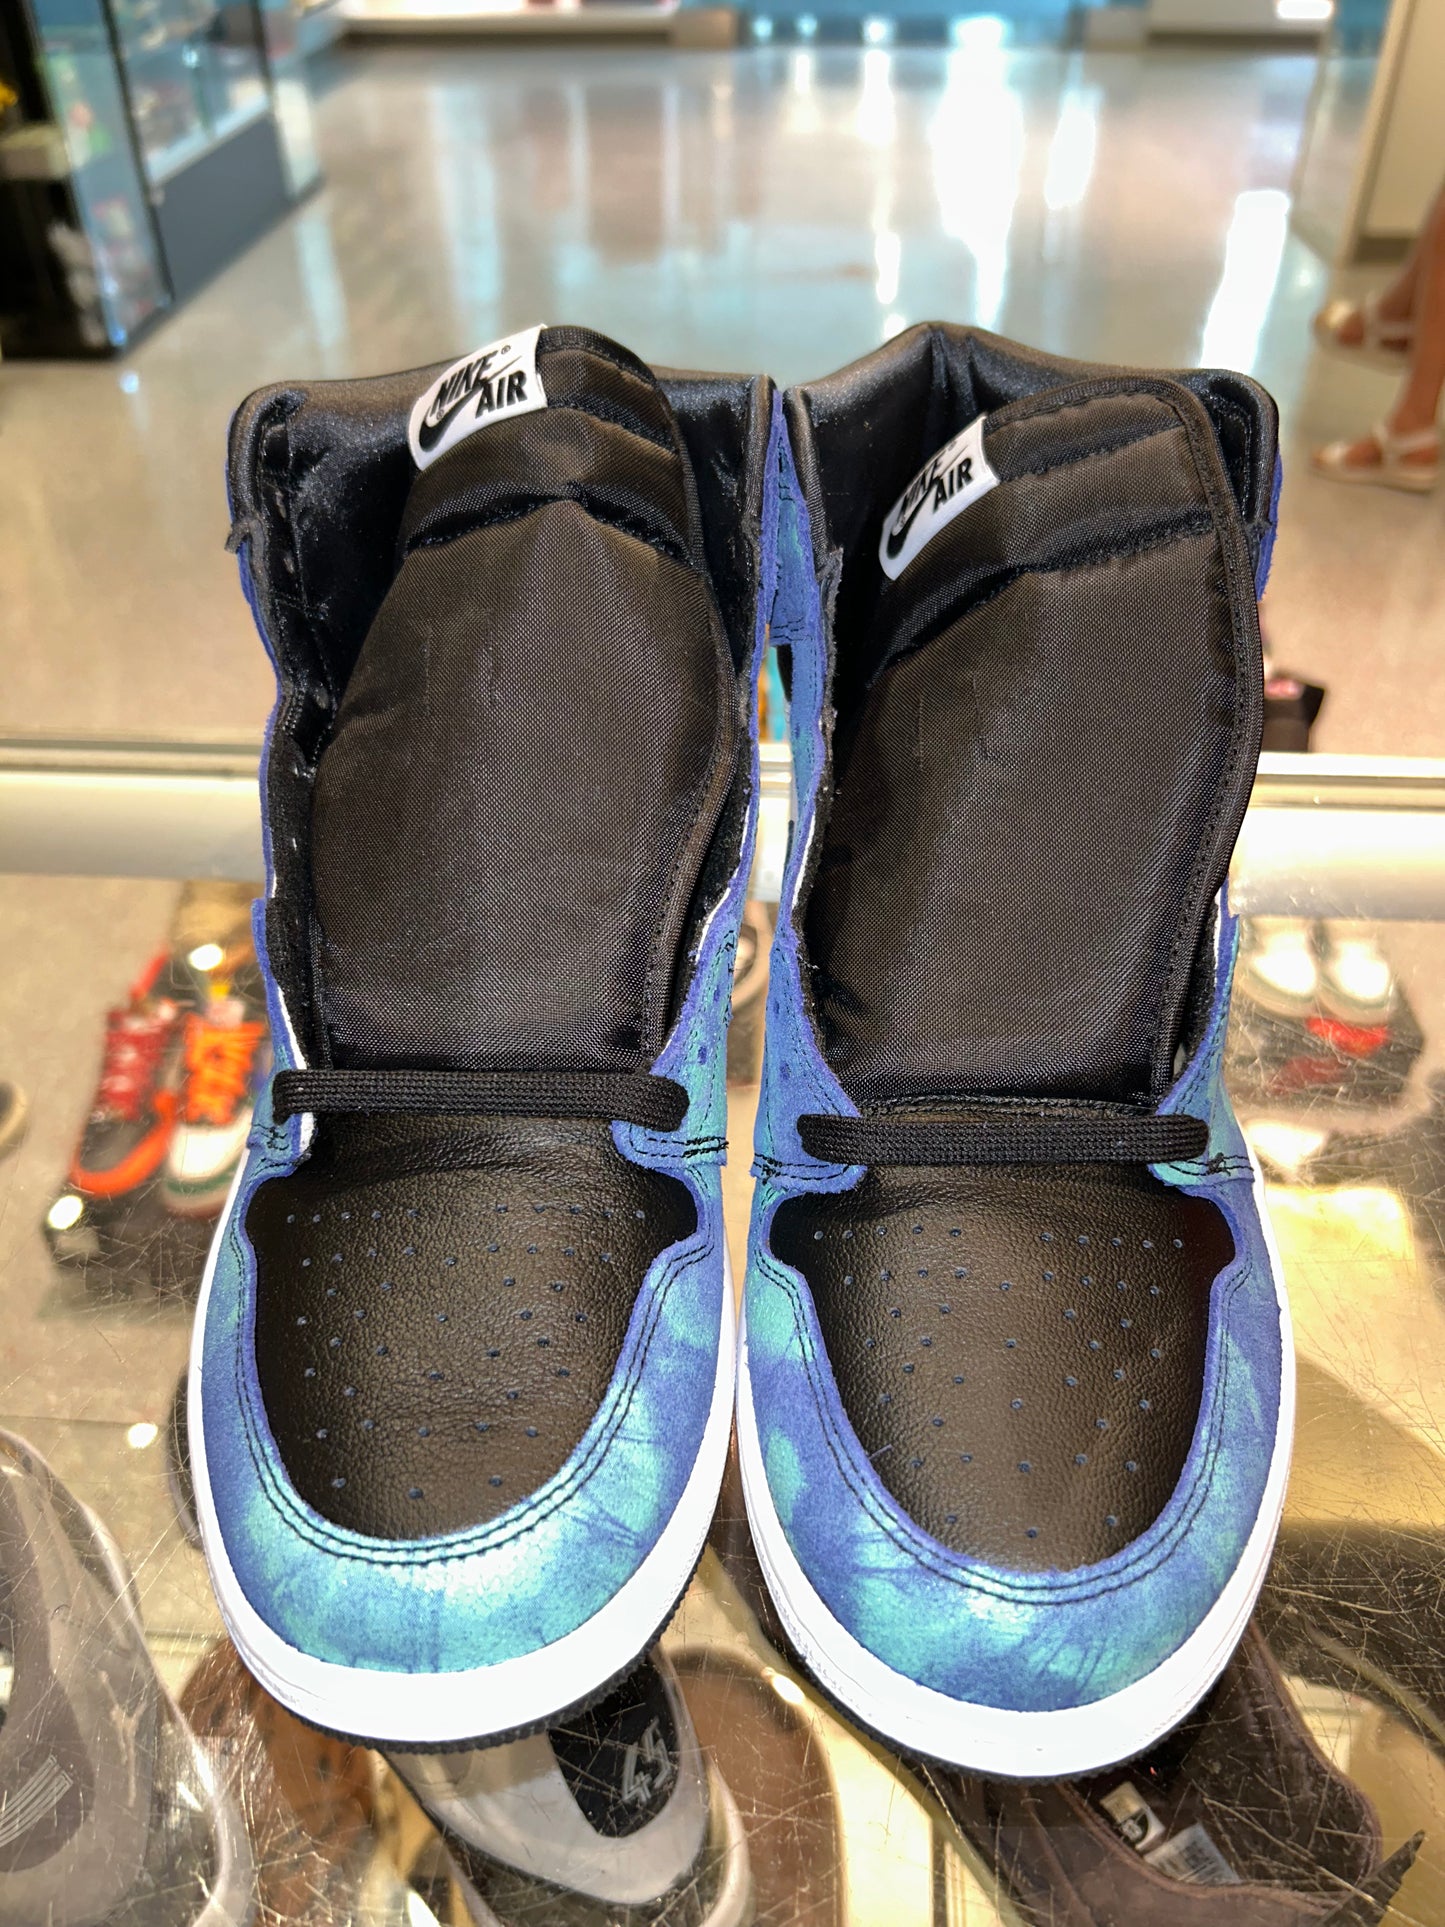 Size 10 (11.5W) Air Jordan 1 “Tie Dye” Brand New (Mall)